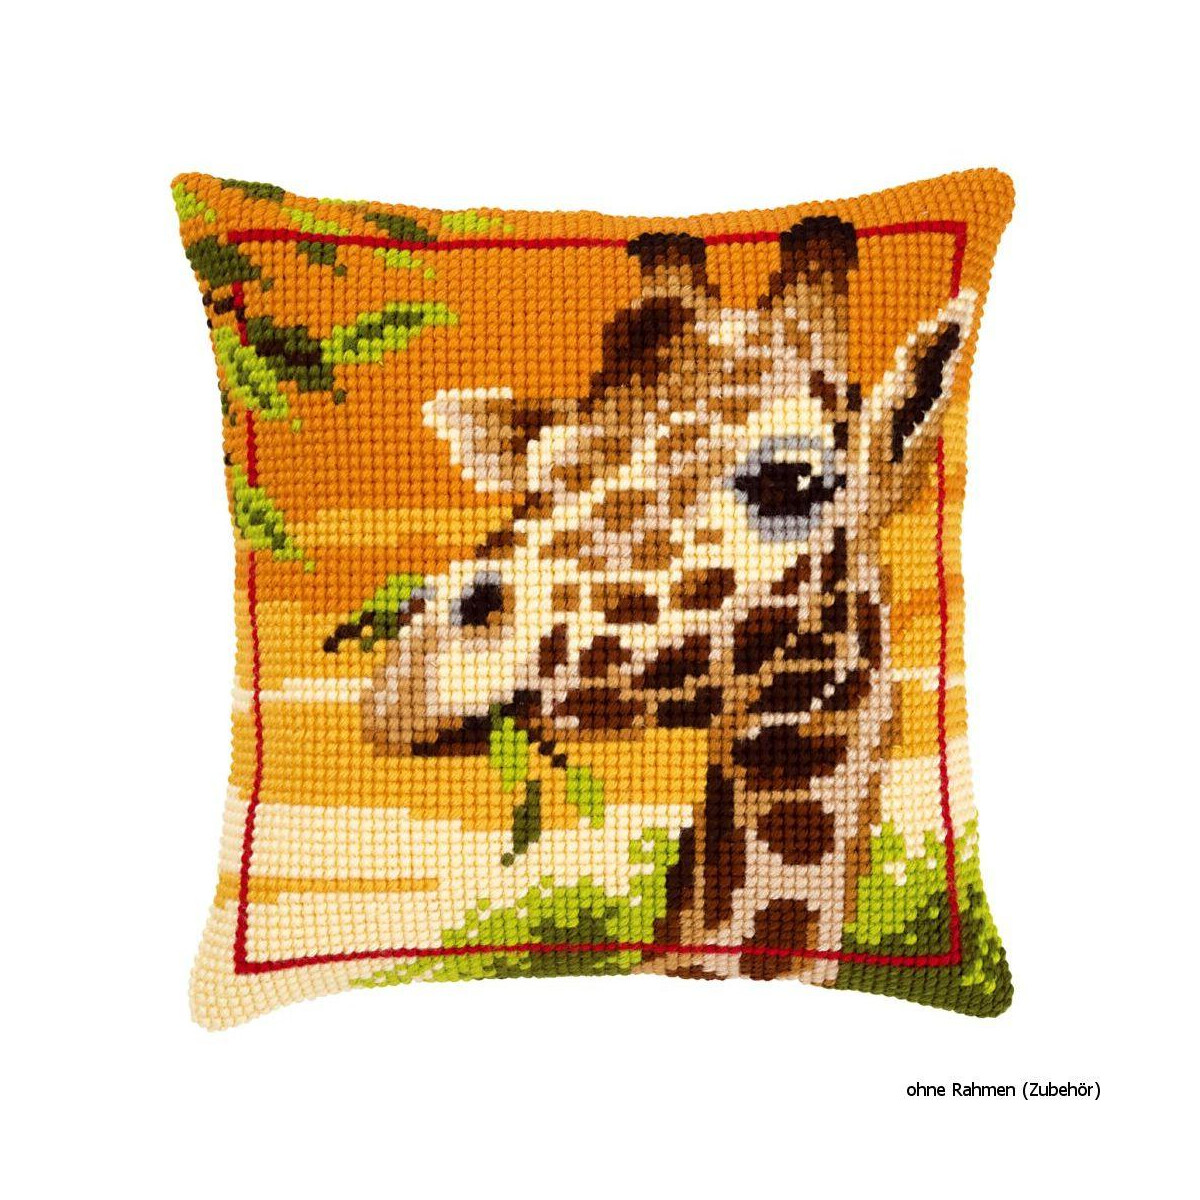 Vervaco stamped cross stitch kit cushion Giraffe, DIY